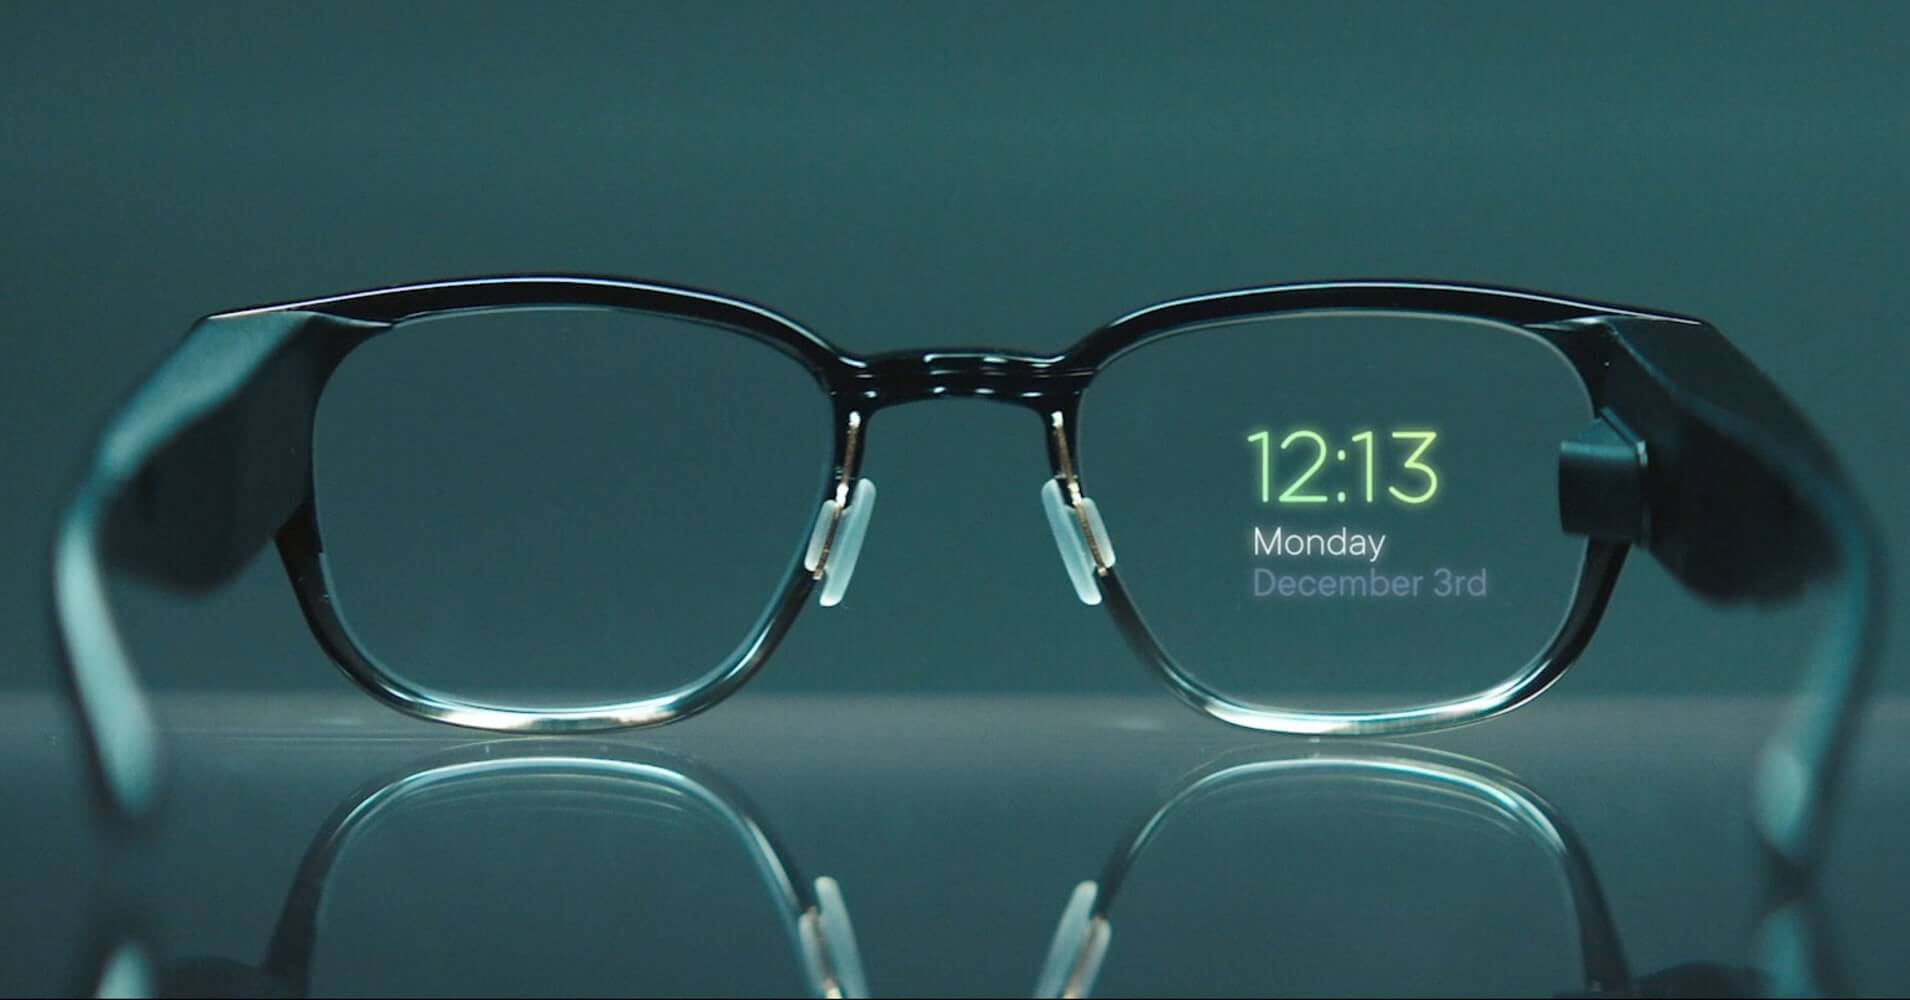 North discontinues Focals smart glasses, focuses on Focals 2.0